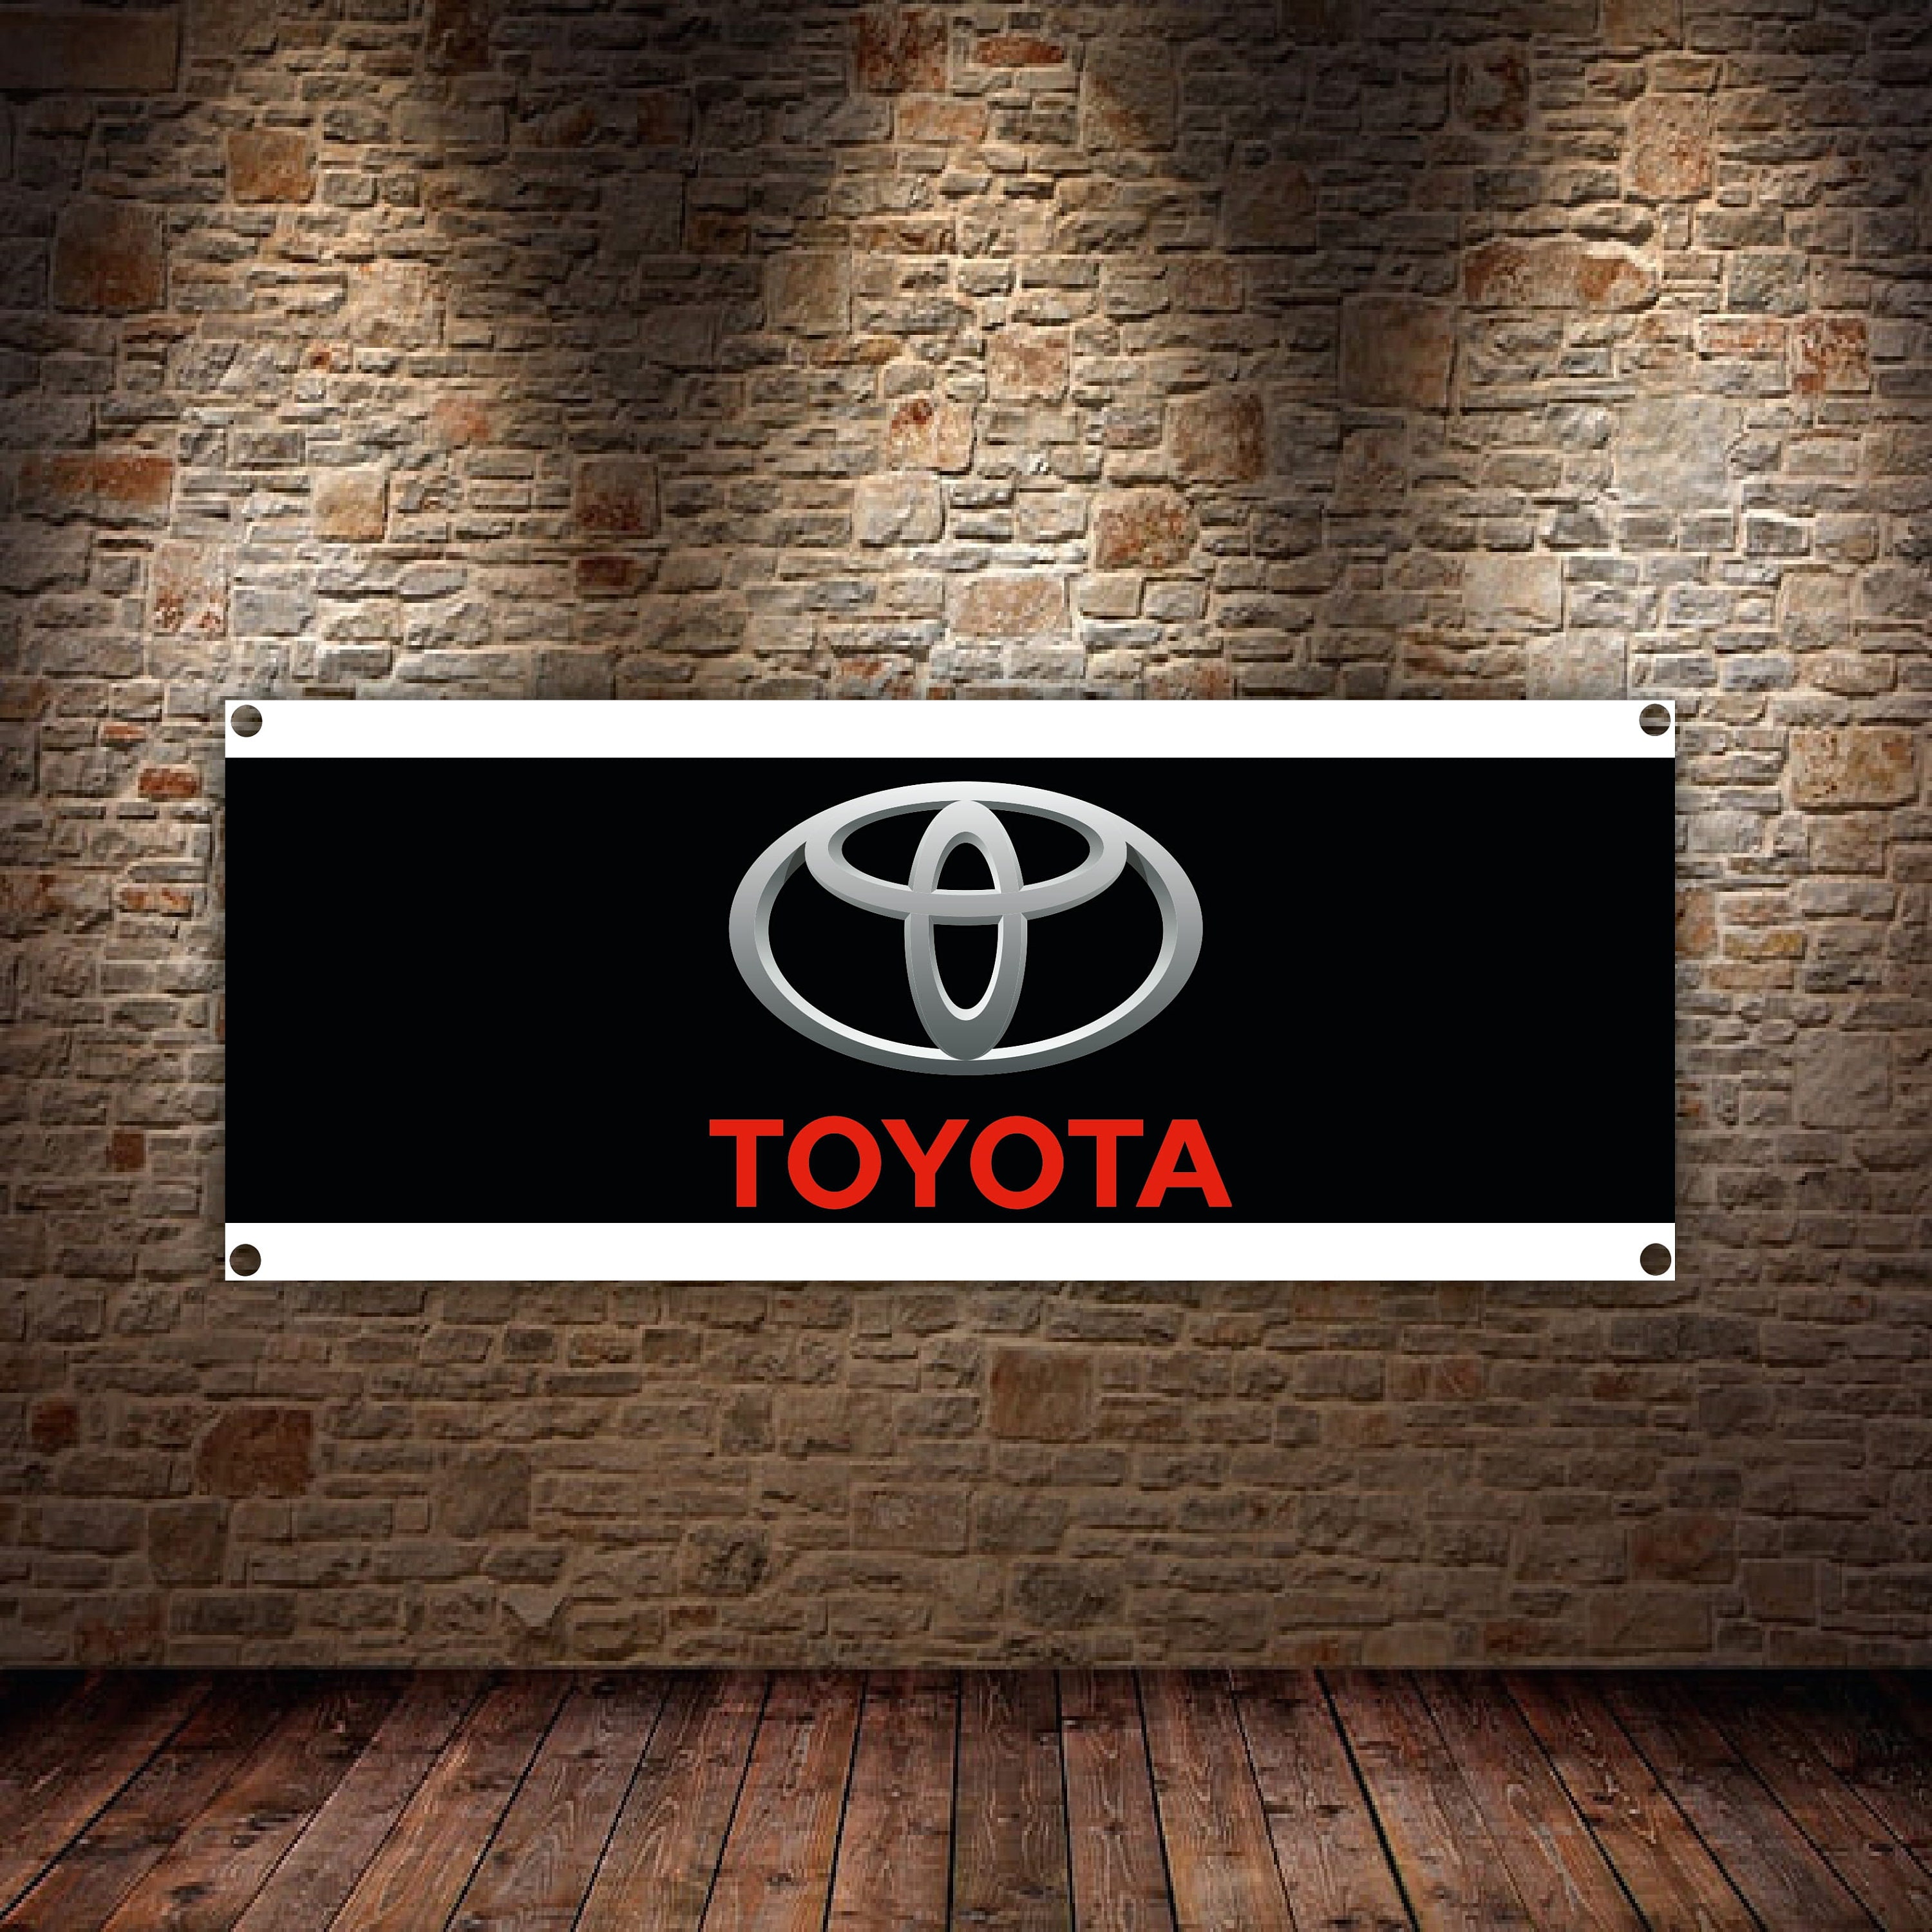 Toyotarace Car Bannercustom Garage Signgarage Kittoyota - Etsy